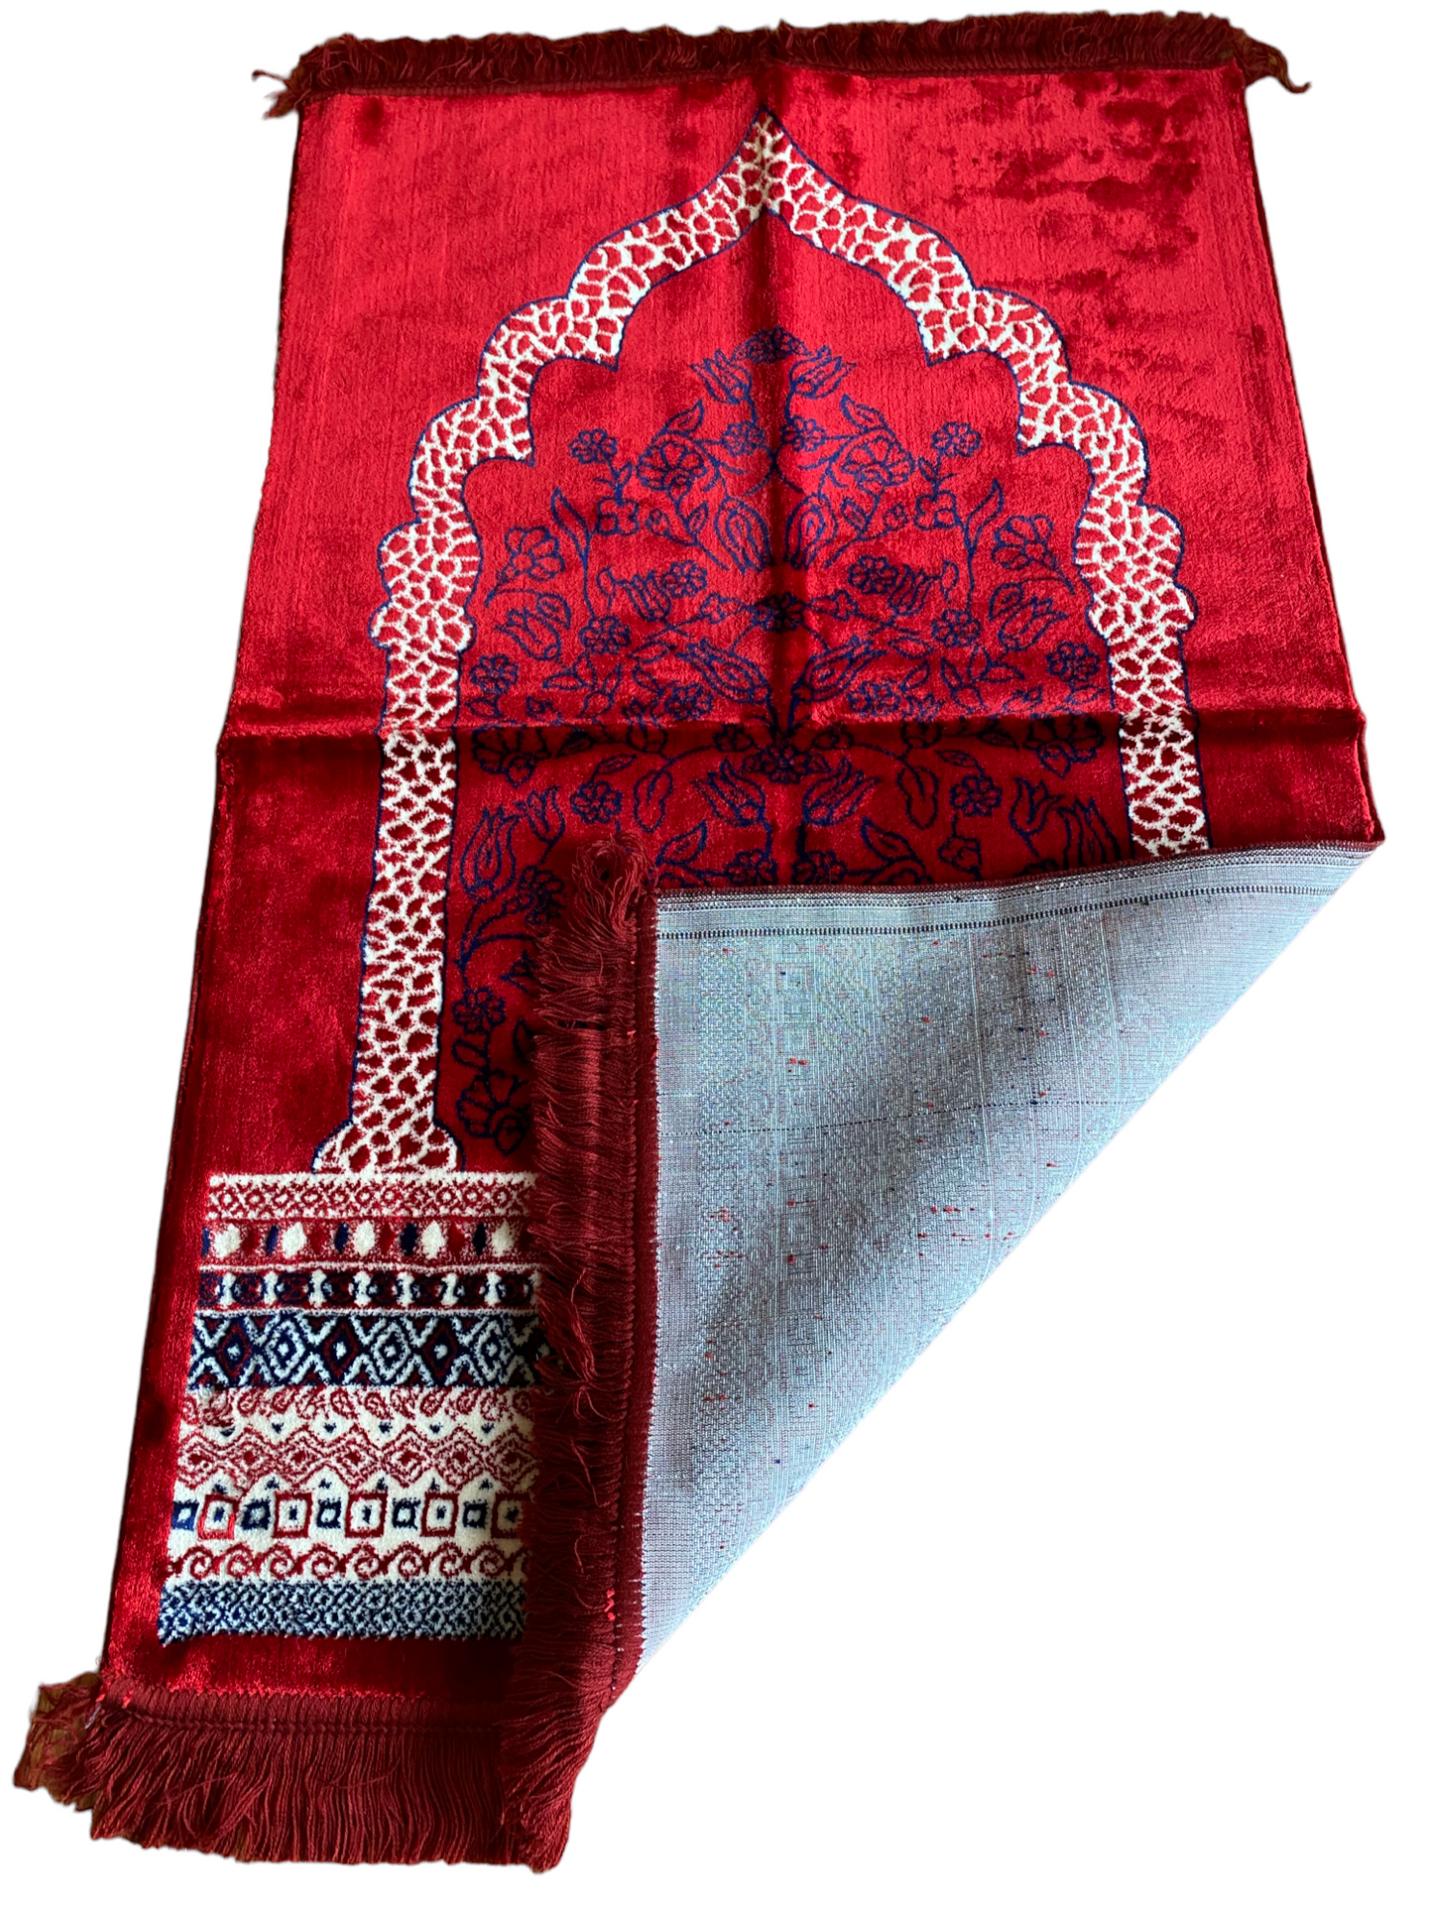 KD Luxury Soft Velvet Prayer Rugs, Muslim Prayer Mats, Islamic Seccade, Sajjadah, Janamaz, Musallah, Islamic Gift